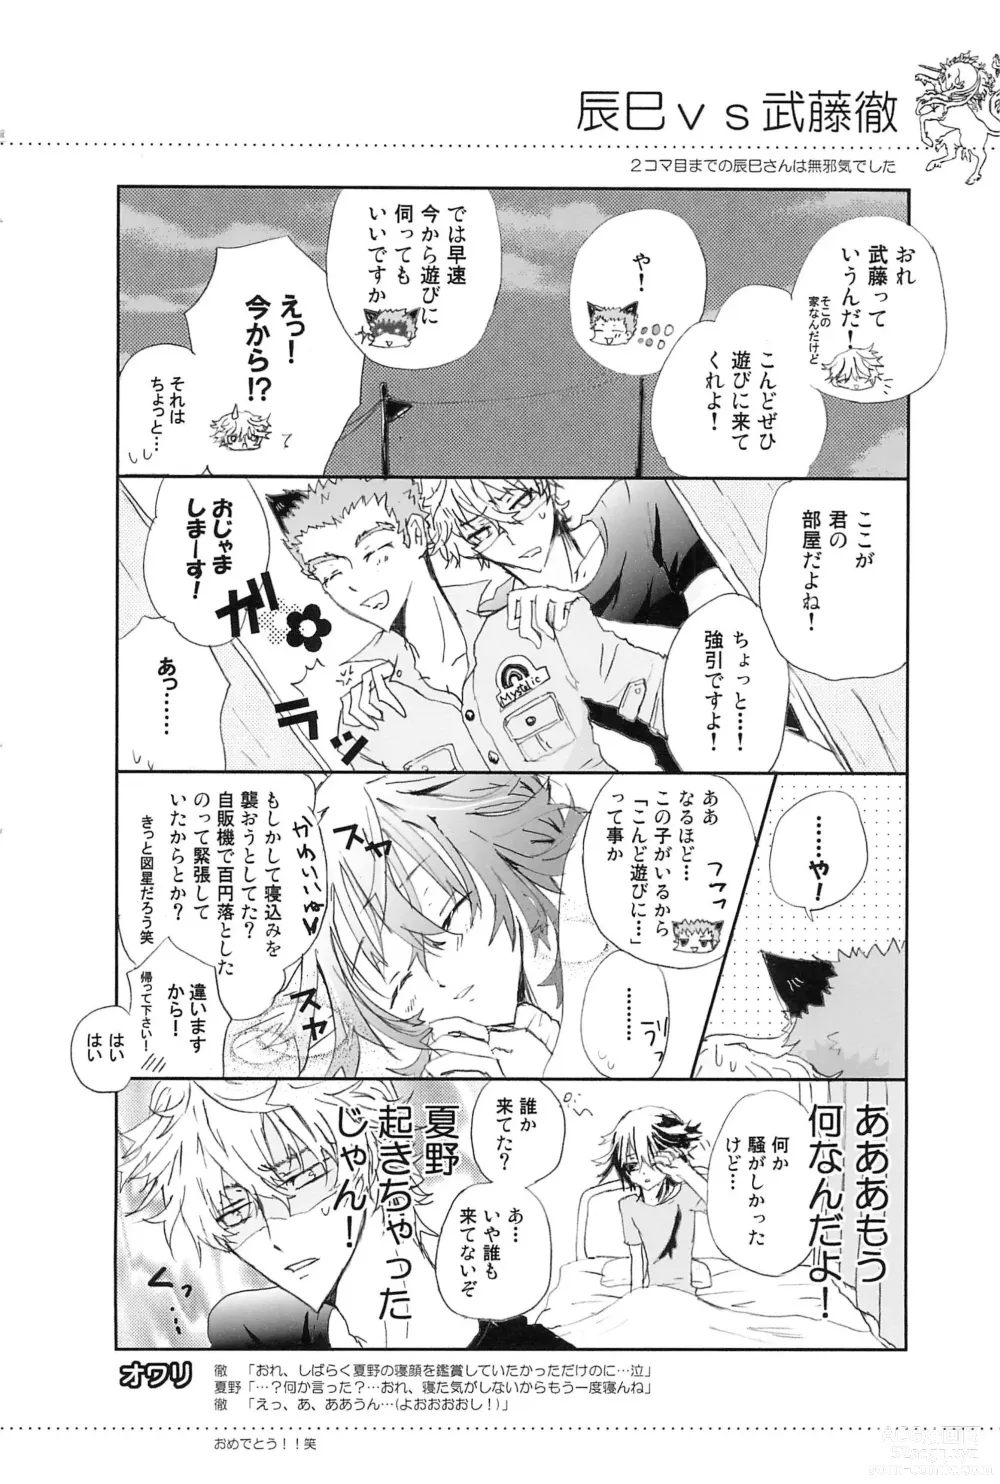 Page 6 of doujinshi Shiki-hon 10